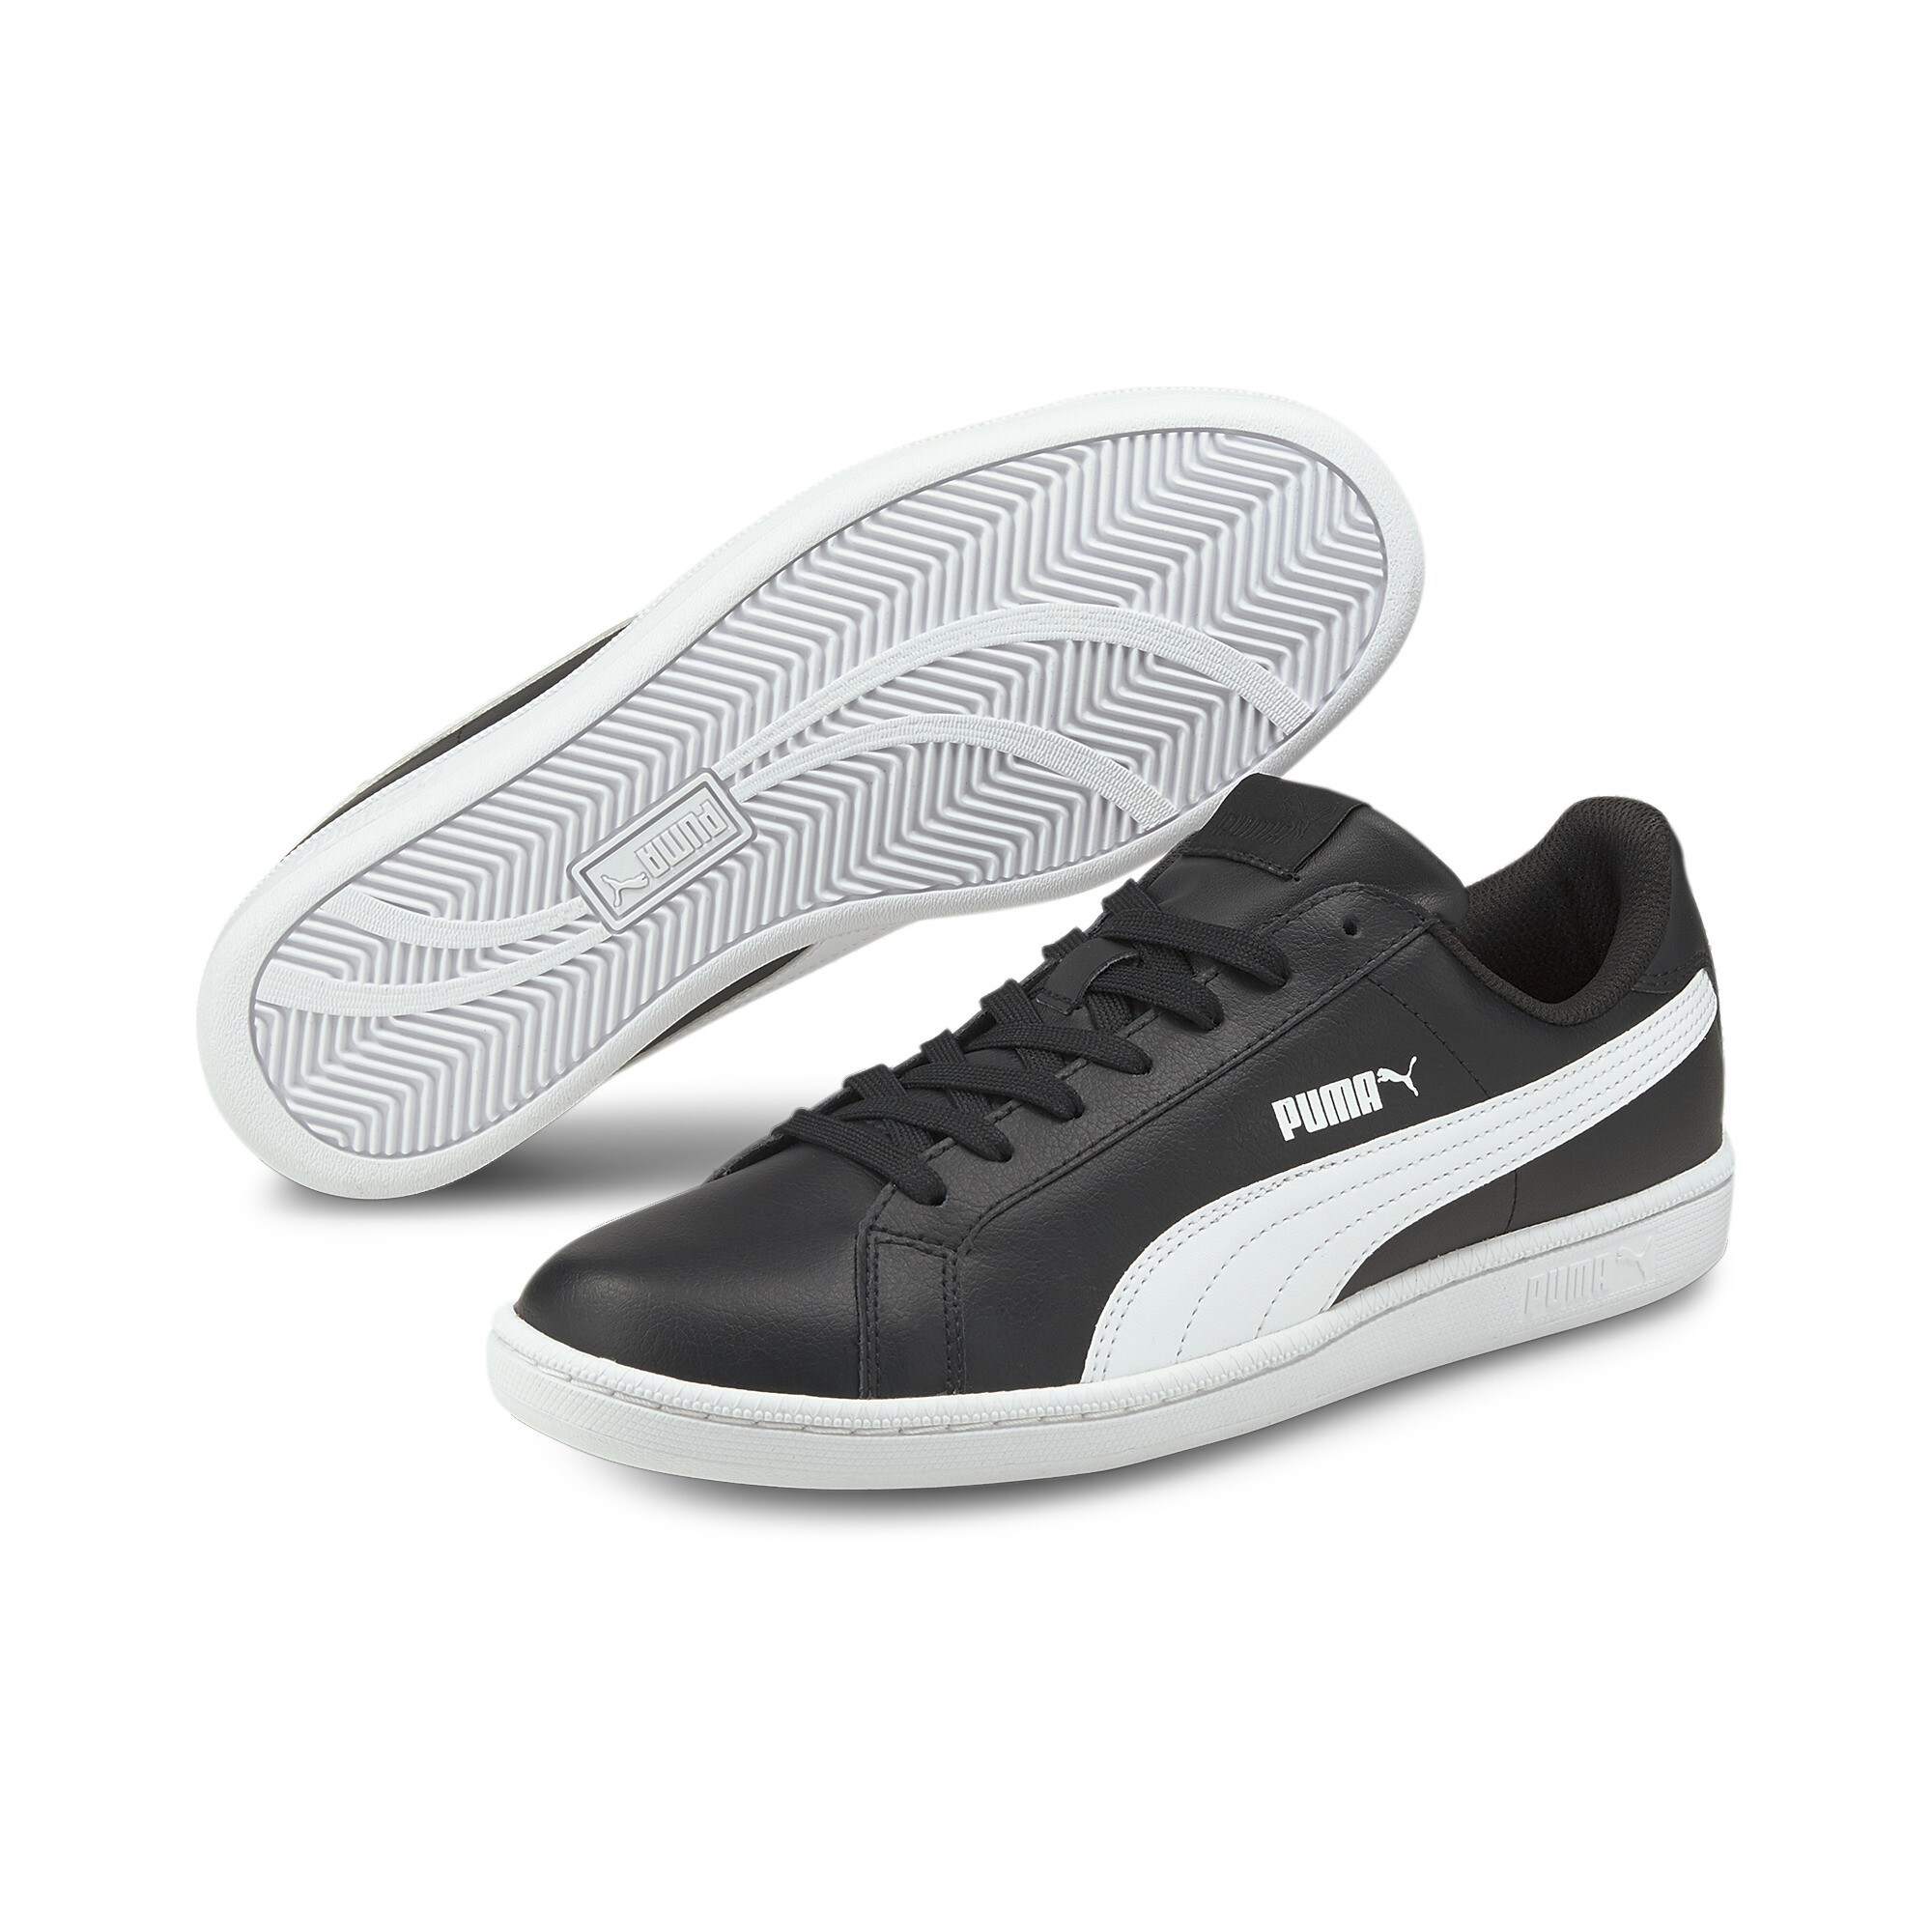 Indexbild 31 - PUMA Smash Trainers Schuhe Sneakers Sport Classics Unisex Neu